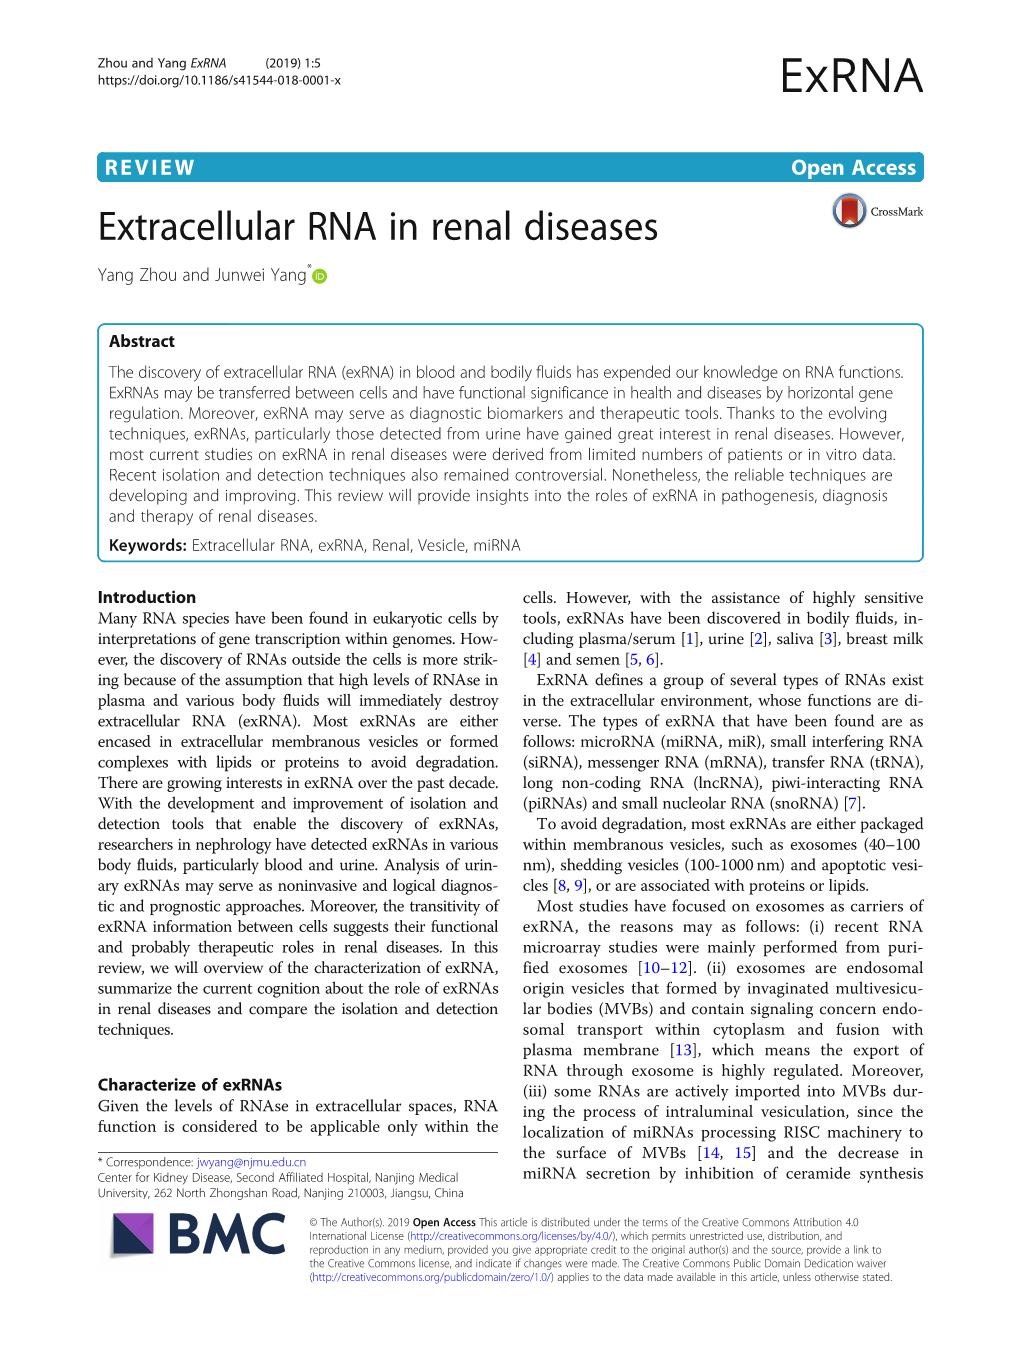 Extracellular RNA in Renal Diseases Yang Zhou and Junwei Yang*